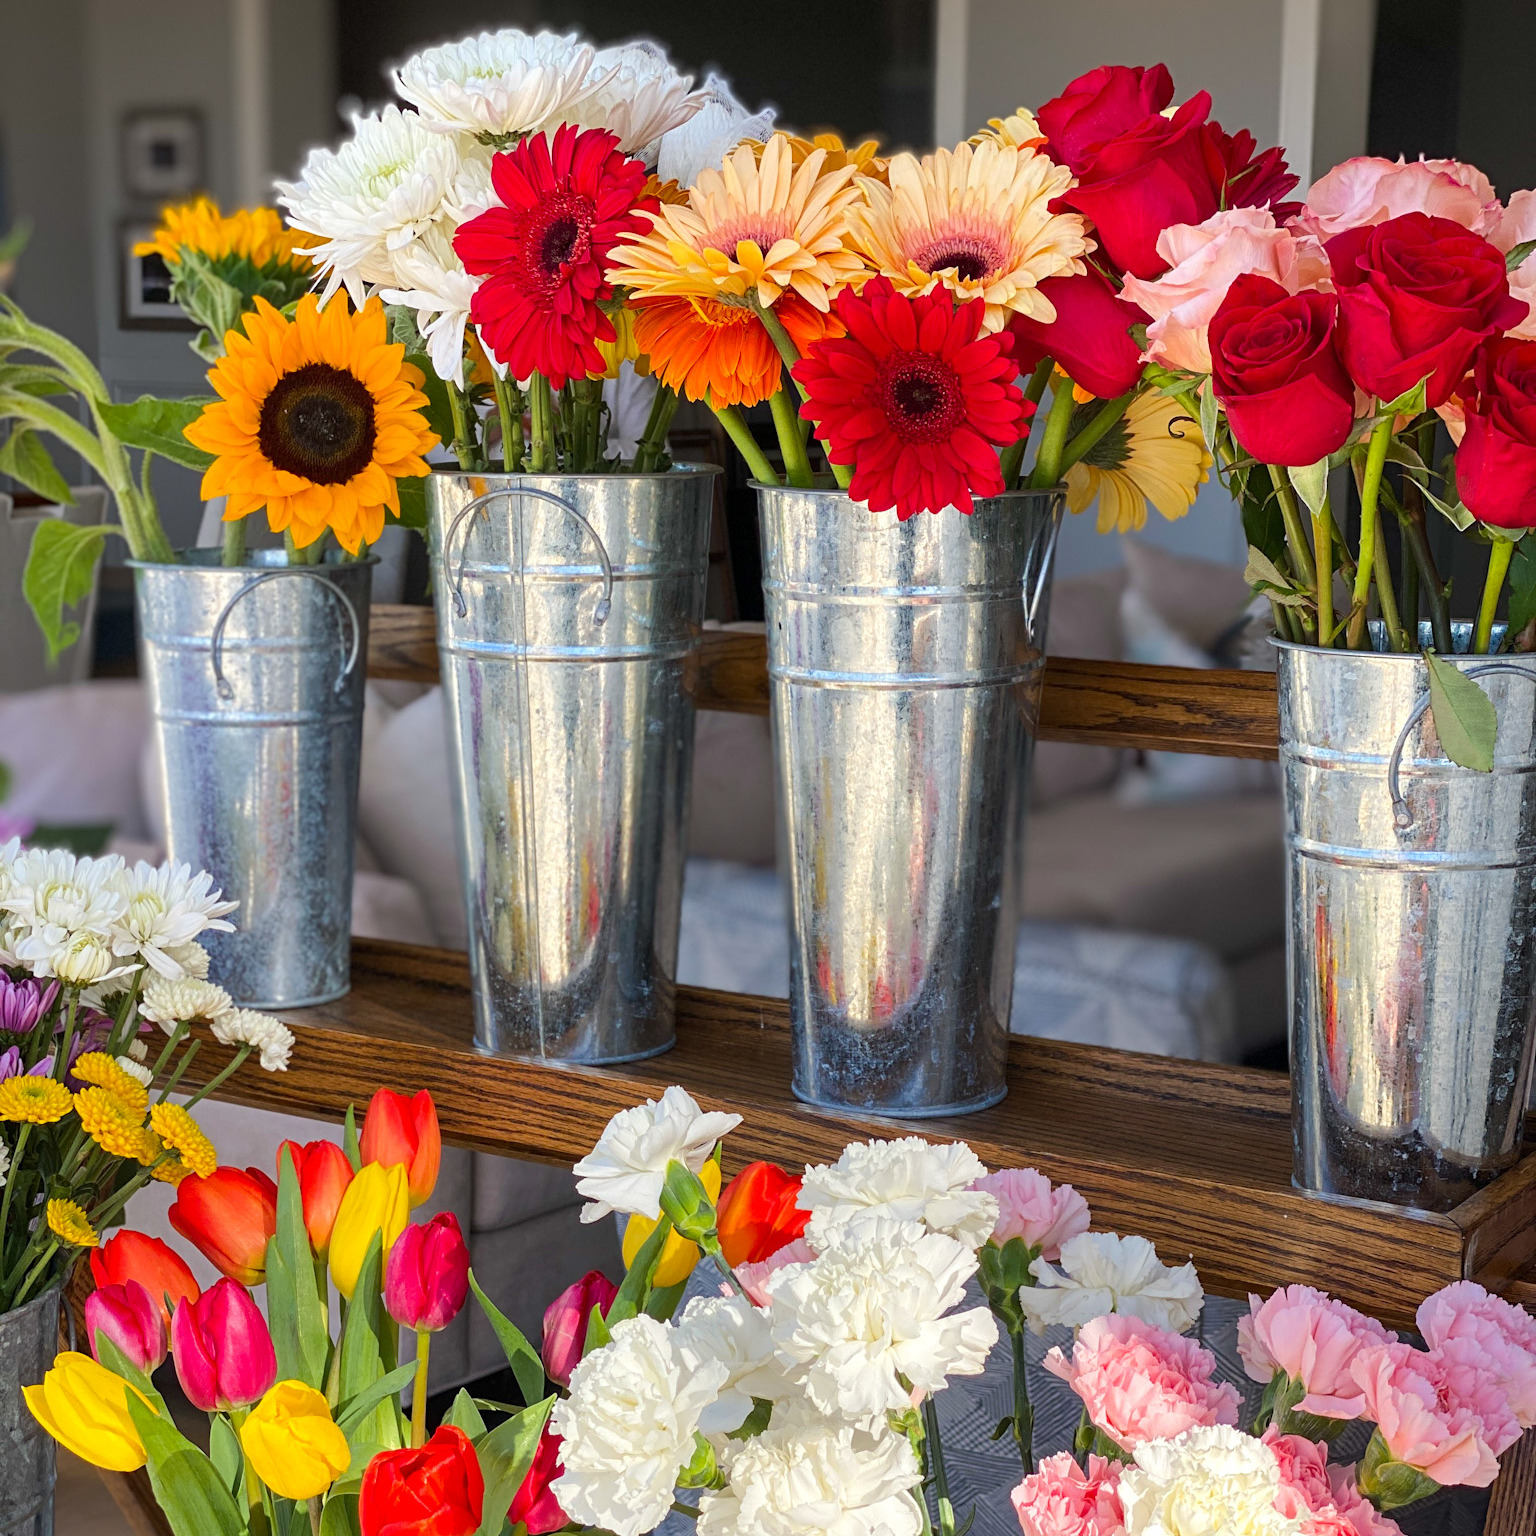 Flower bouquets in metal vases.